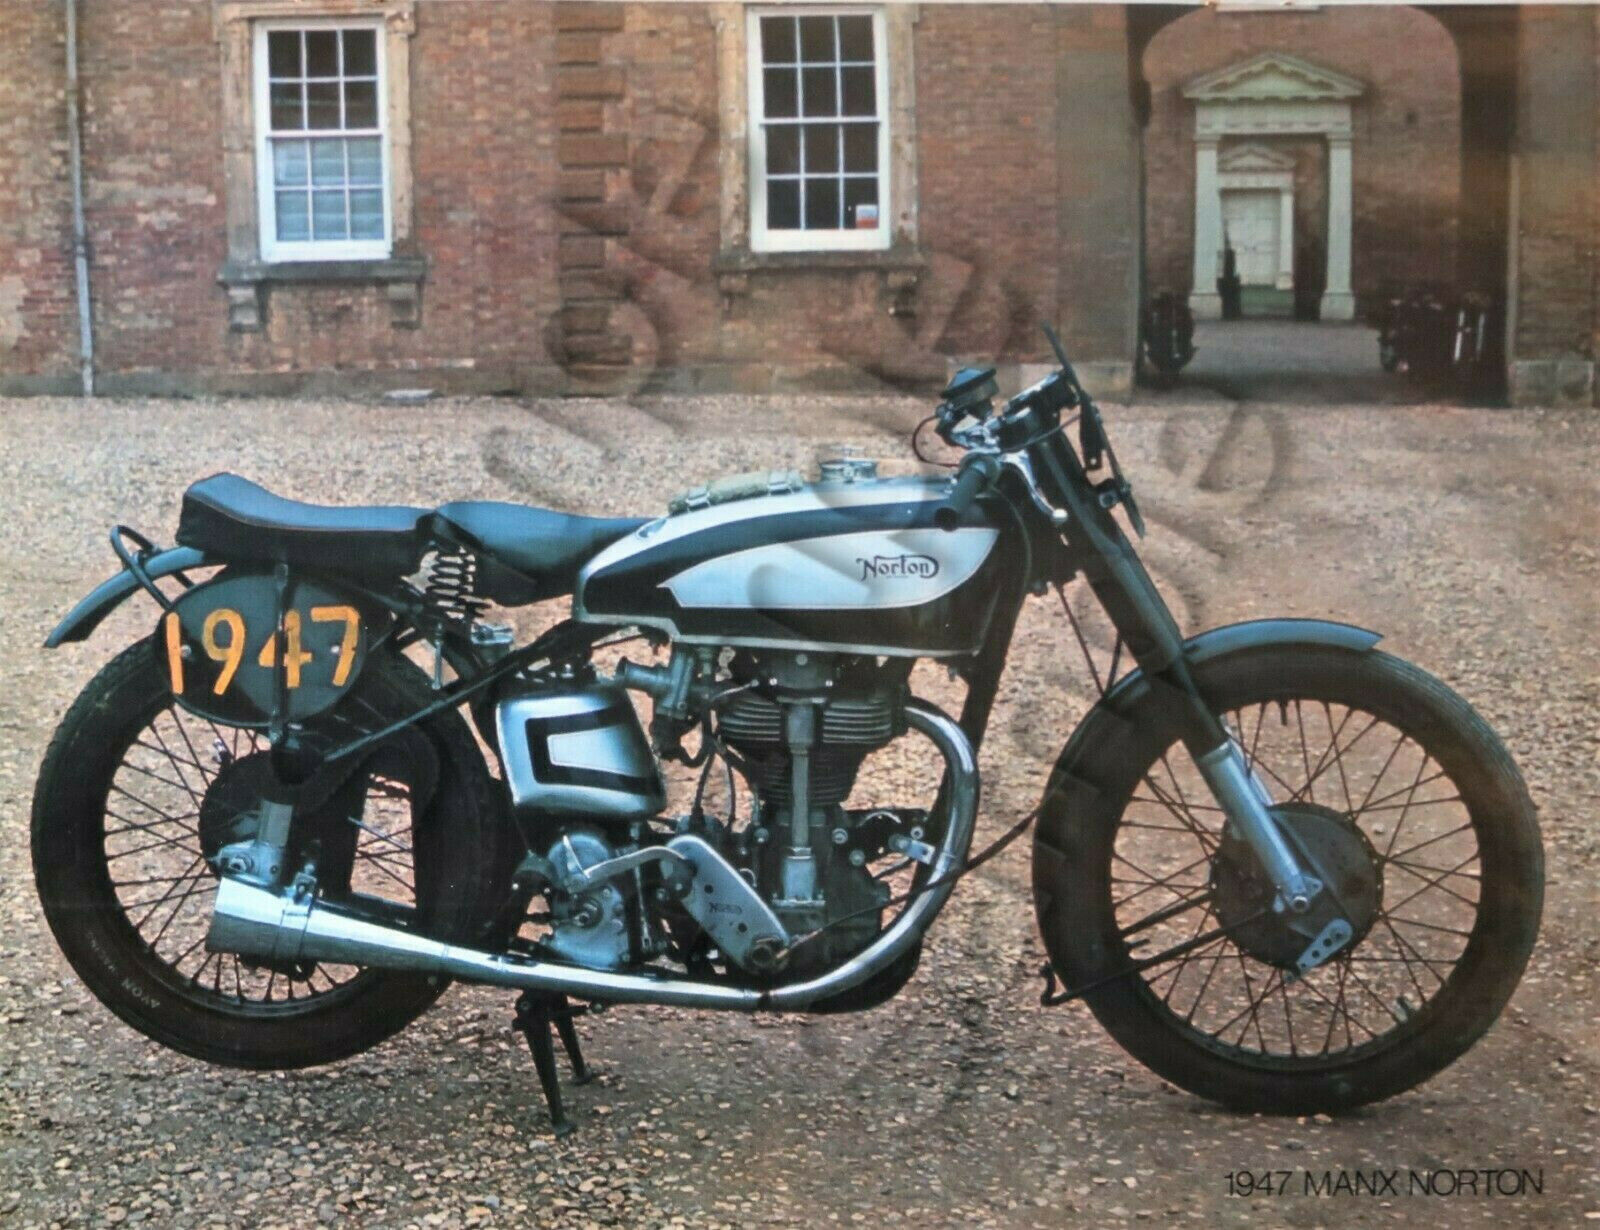 Manx Norton Motorcycle - A3/A4 Size Print Poster